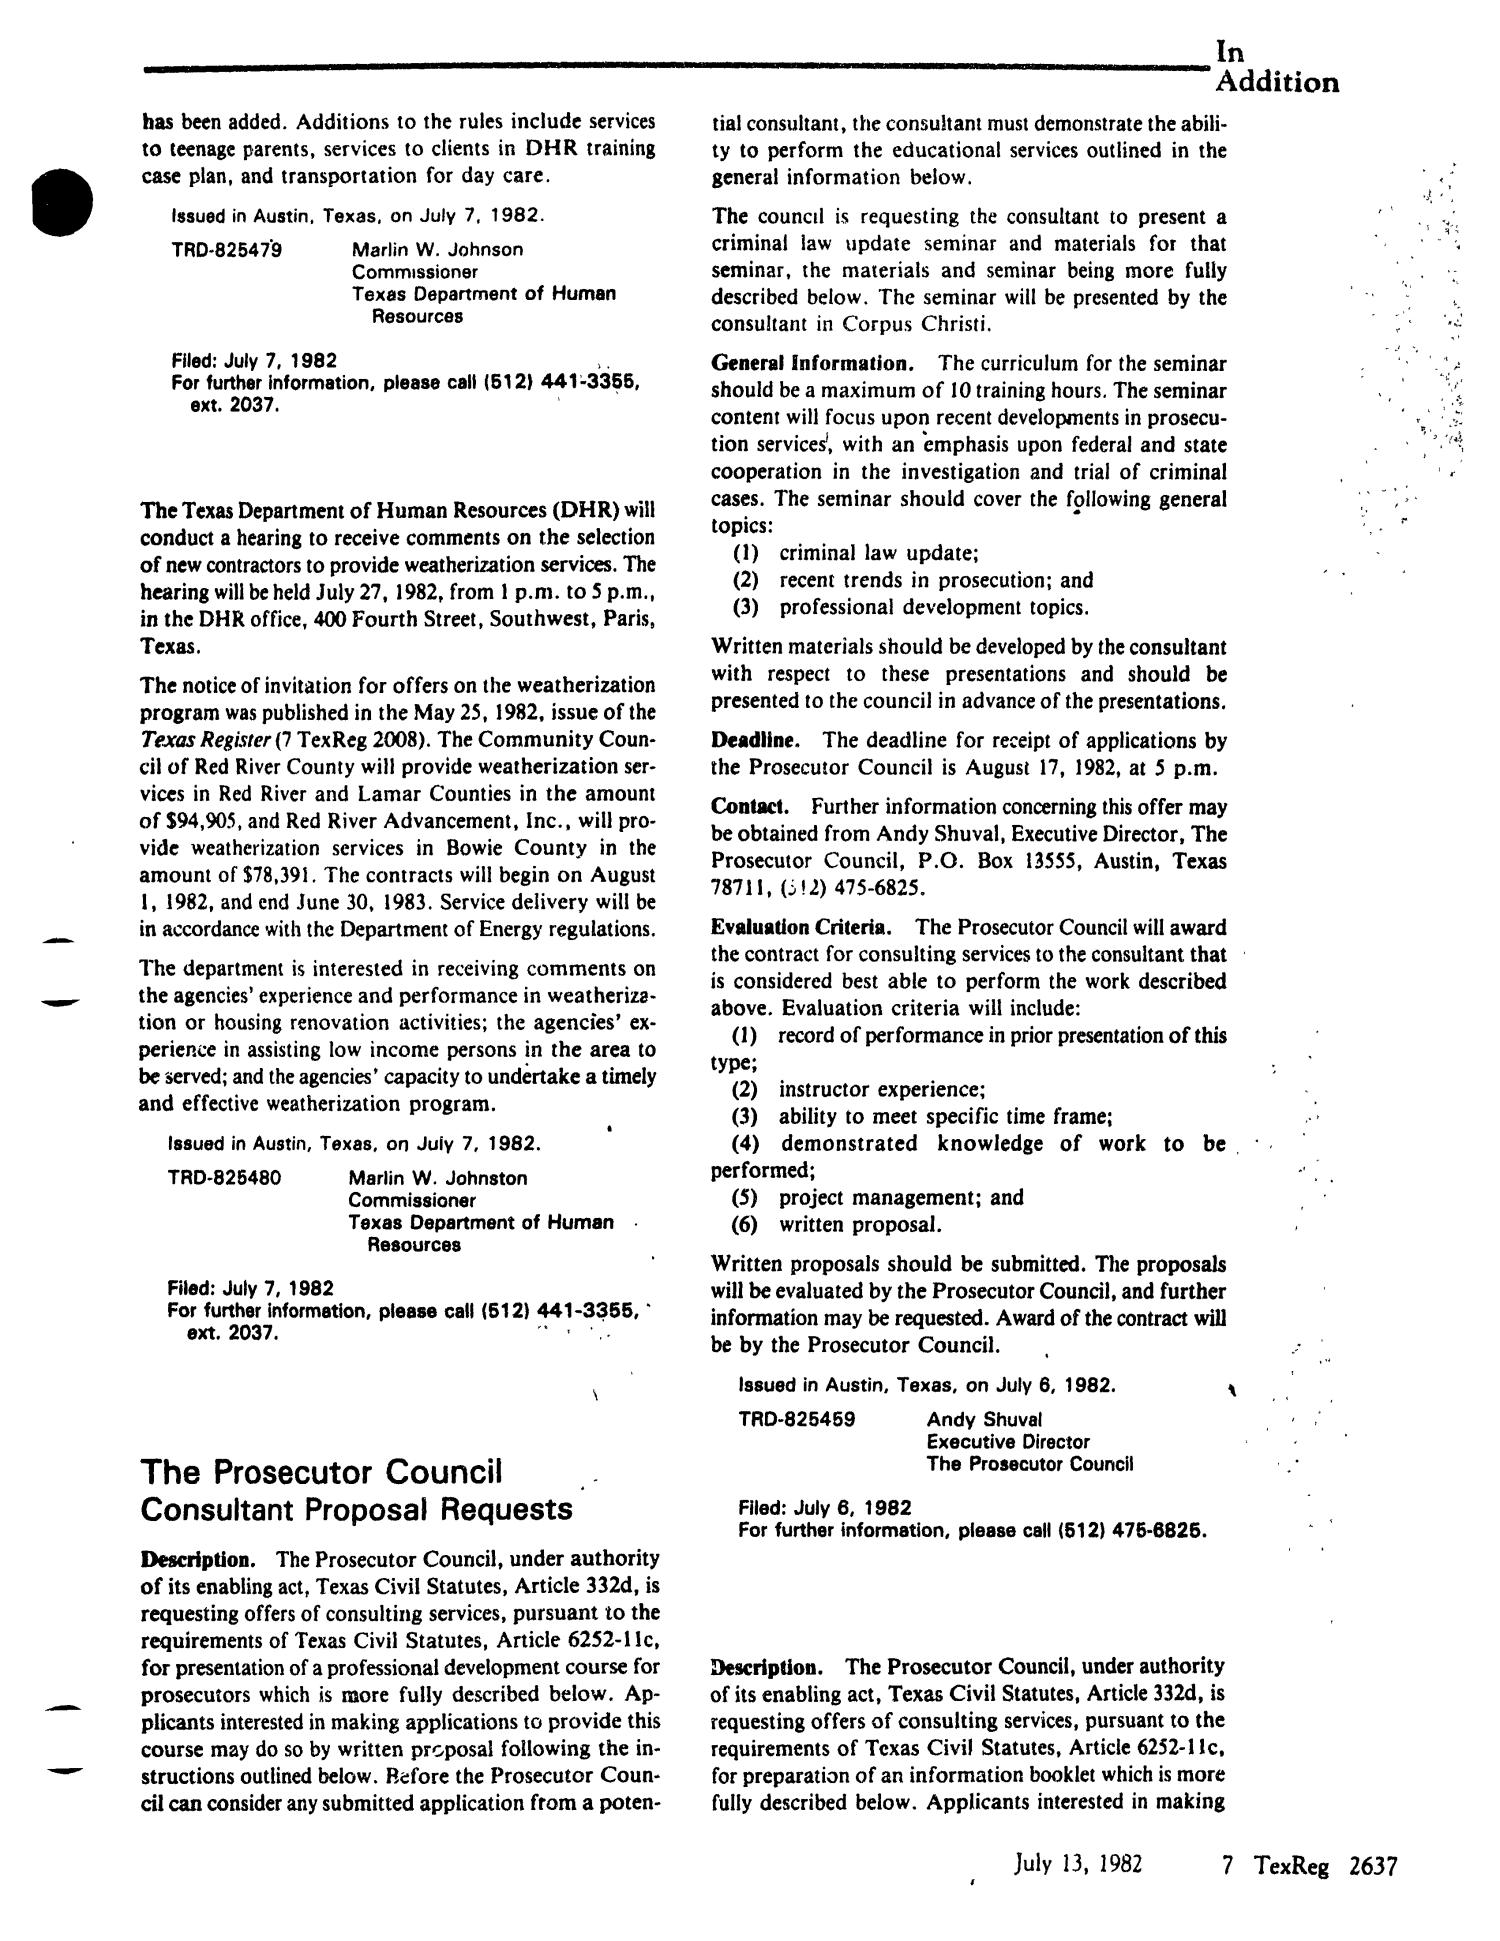 Texas Register, Volume 7, Number 52, Pages 2617-2638, July 13, 1982
                                                
                                                    2637
                                                